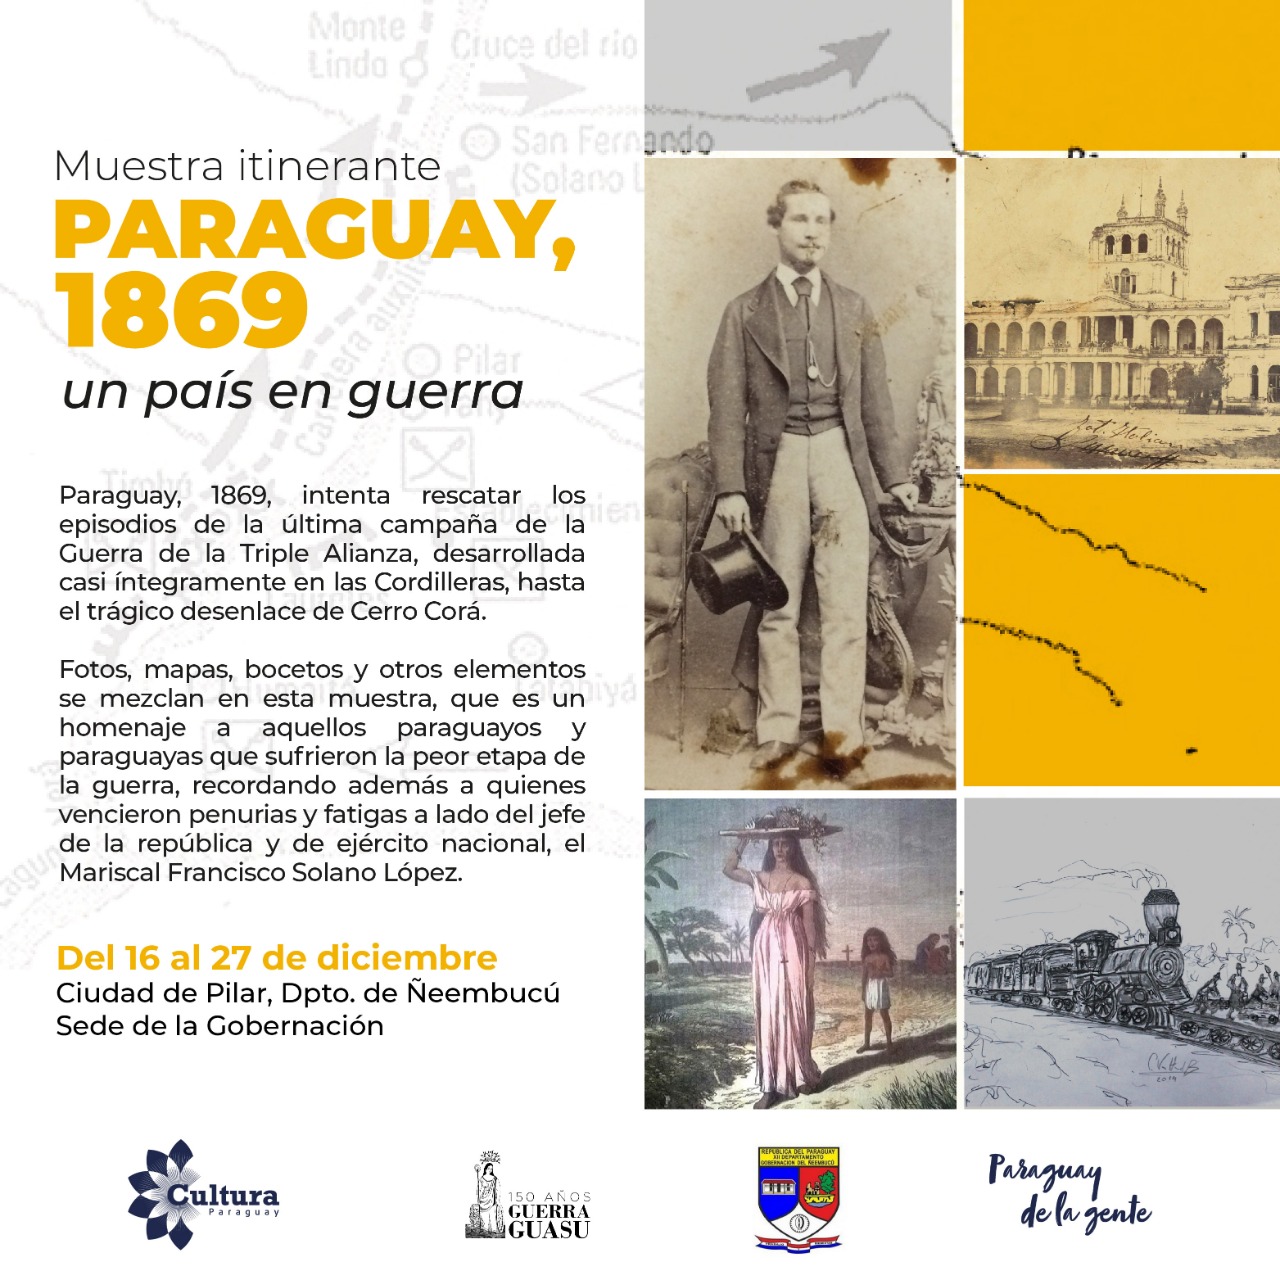 Muestra itinerante “Paraguay 1869, Un país en guerra” llega a Pilar imagen